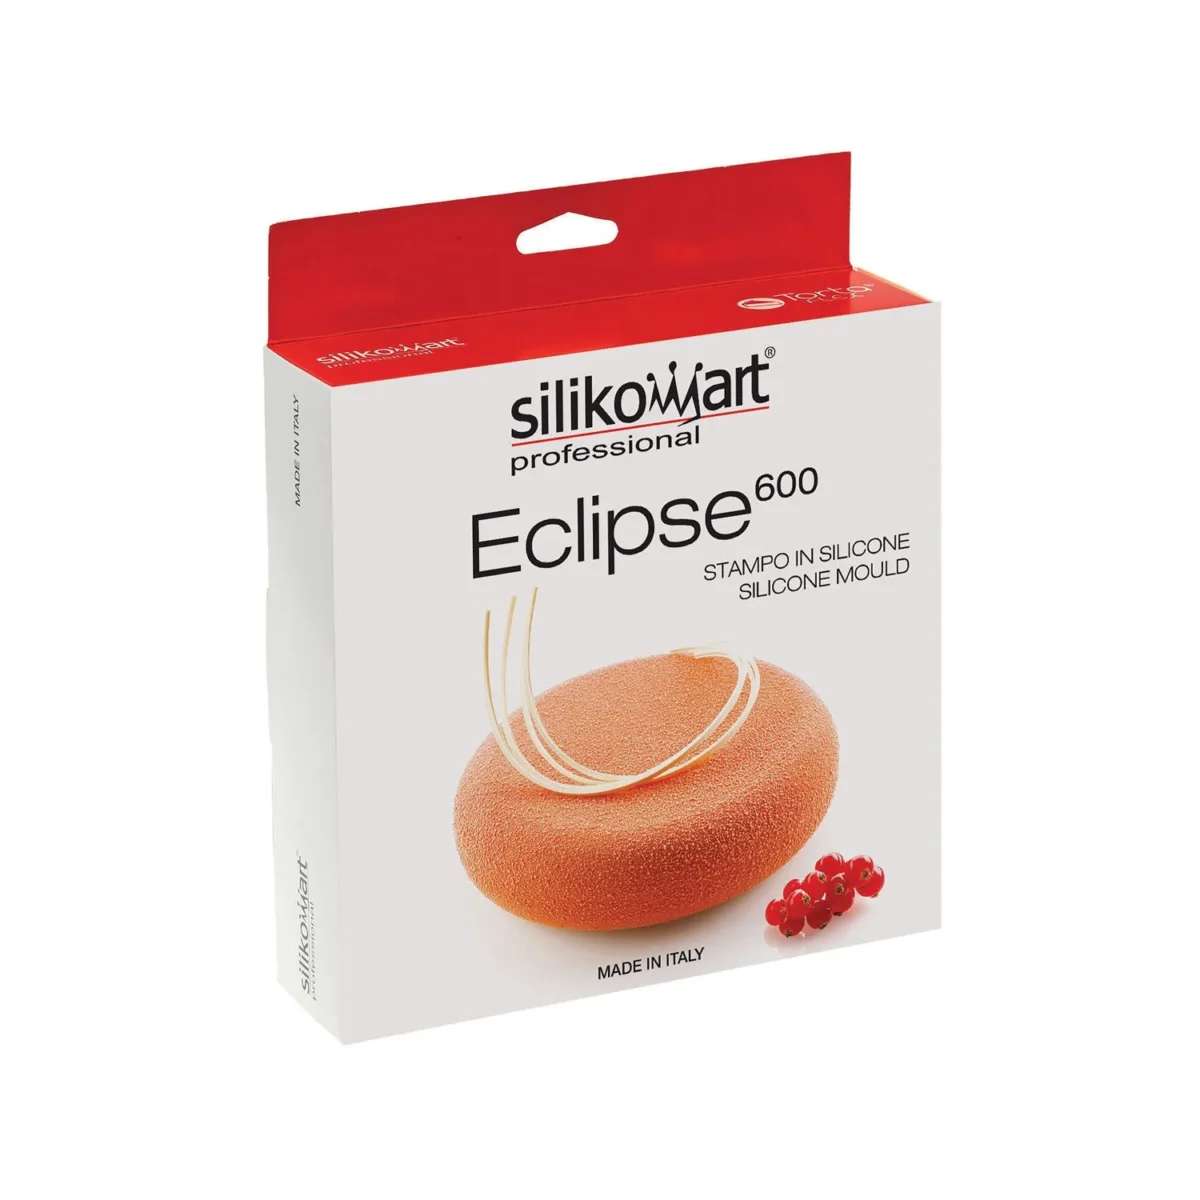 20.376.87.0065 Silikomart Eclipse 600